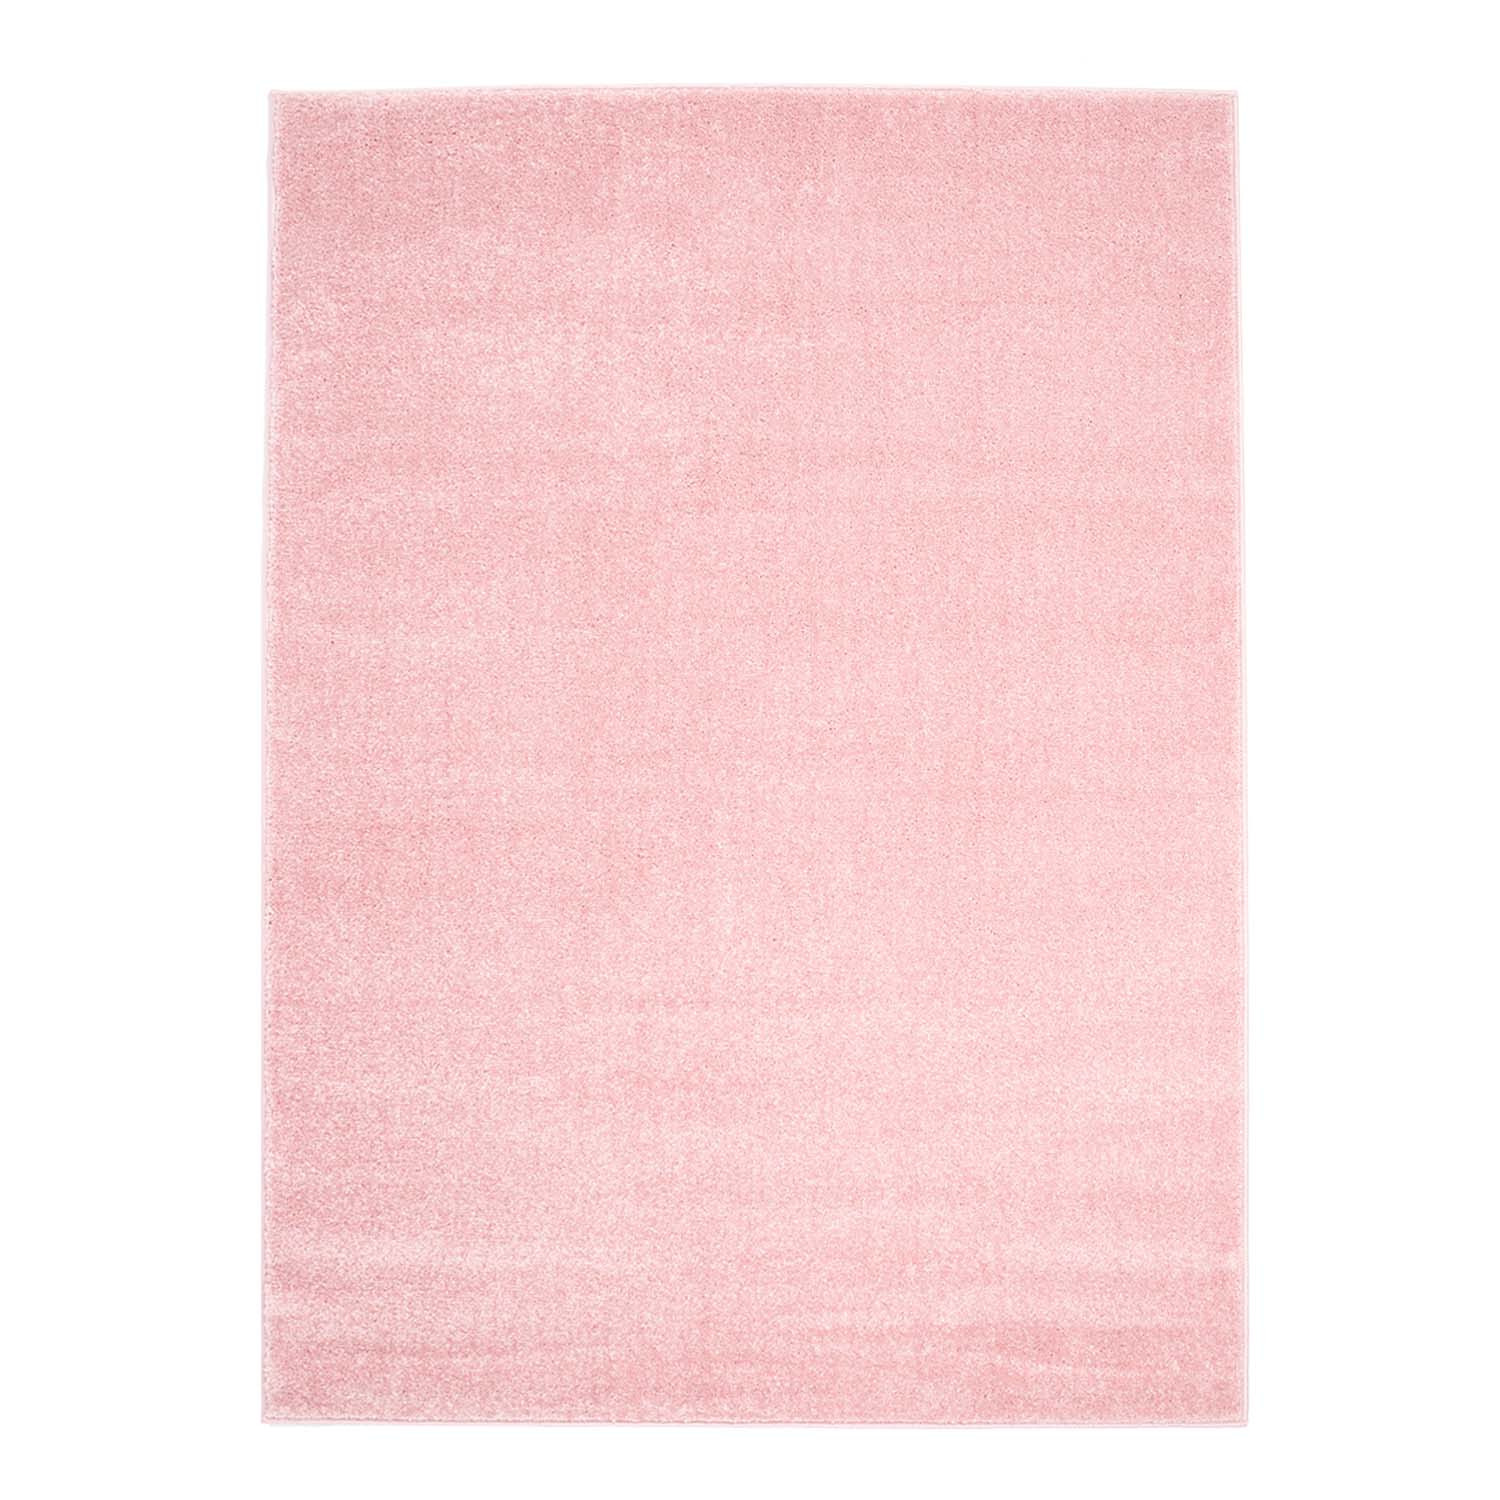 Wilton-teppe - Moda (rosa)